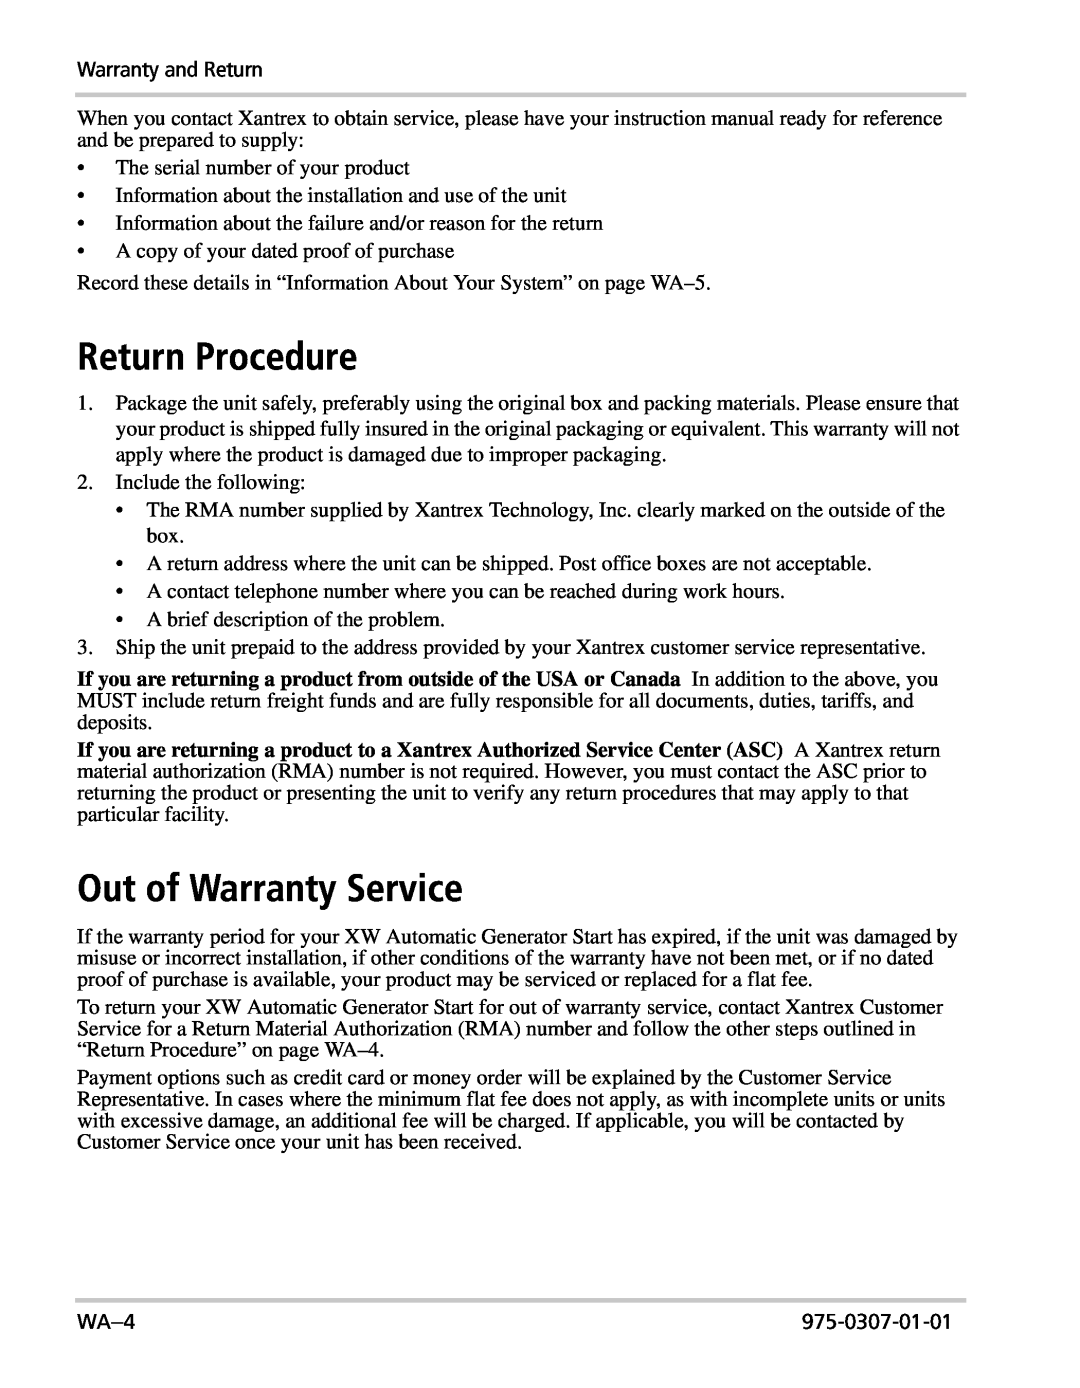 Xantrex Technology XW manual Return Procedure, Out of Warranty Service 